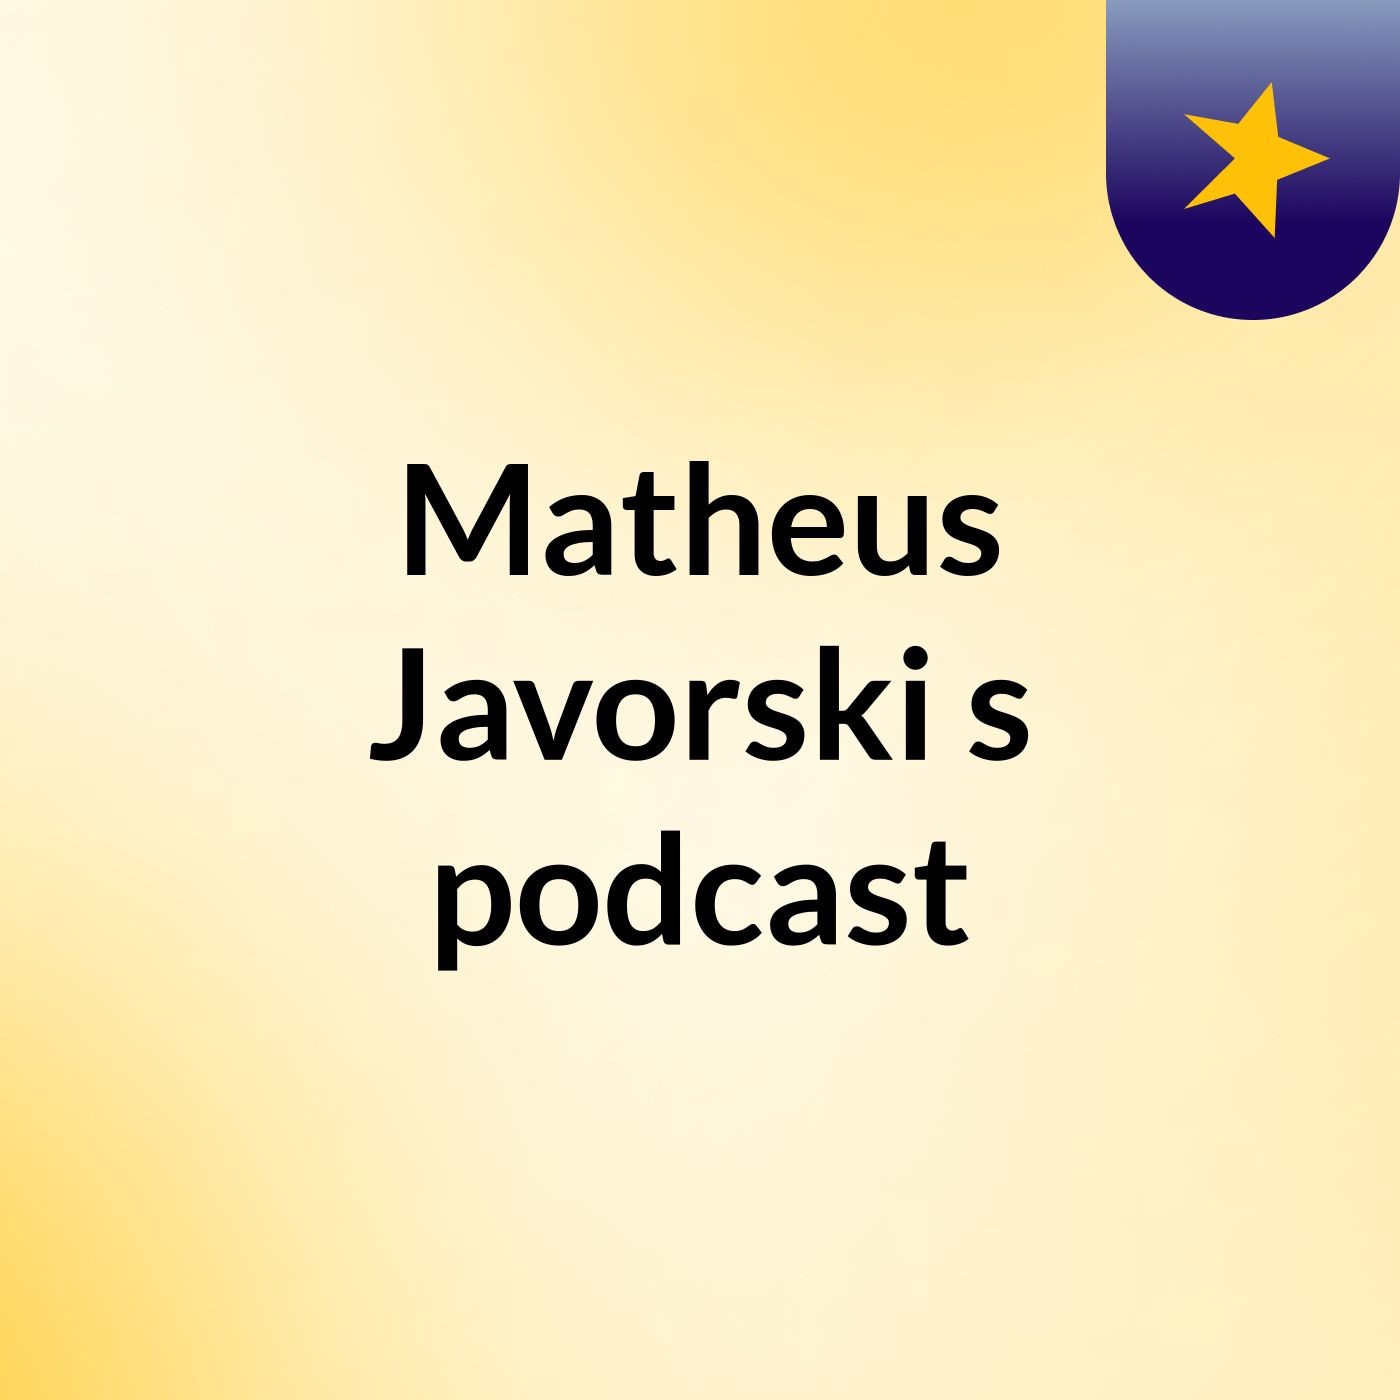 Matheus Javorski's podcast